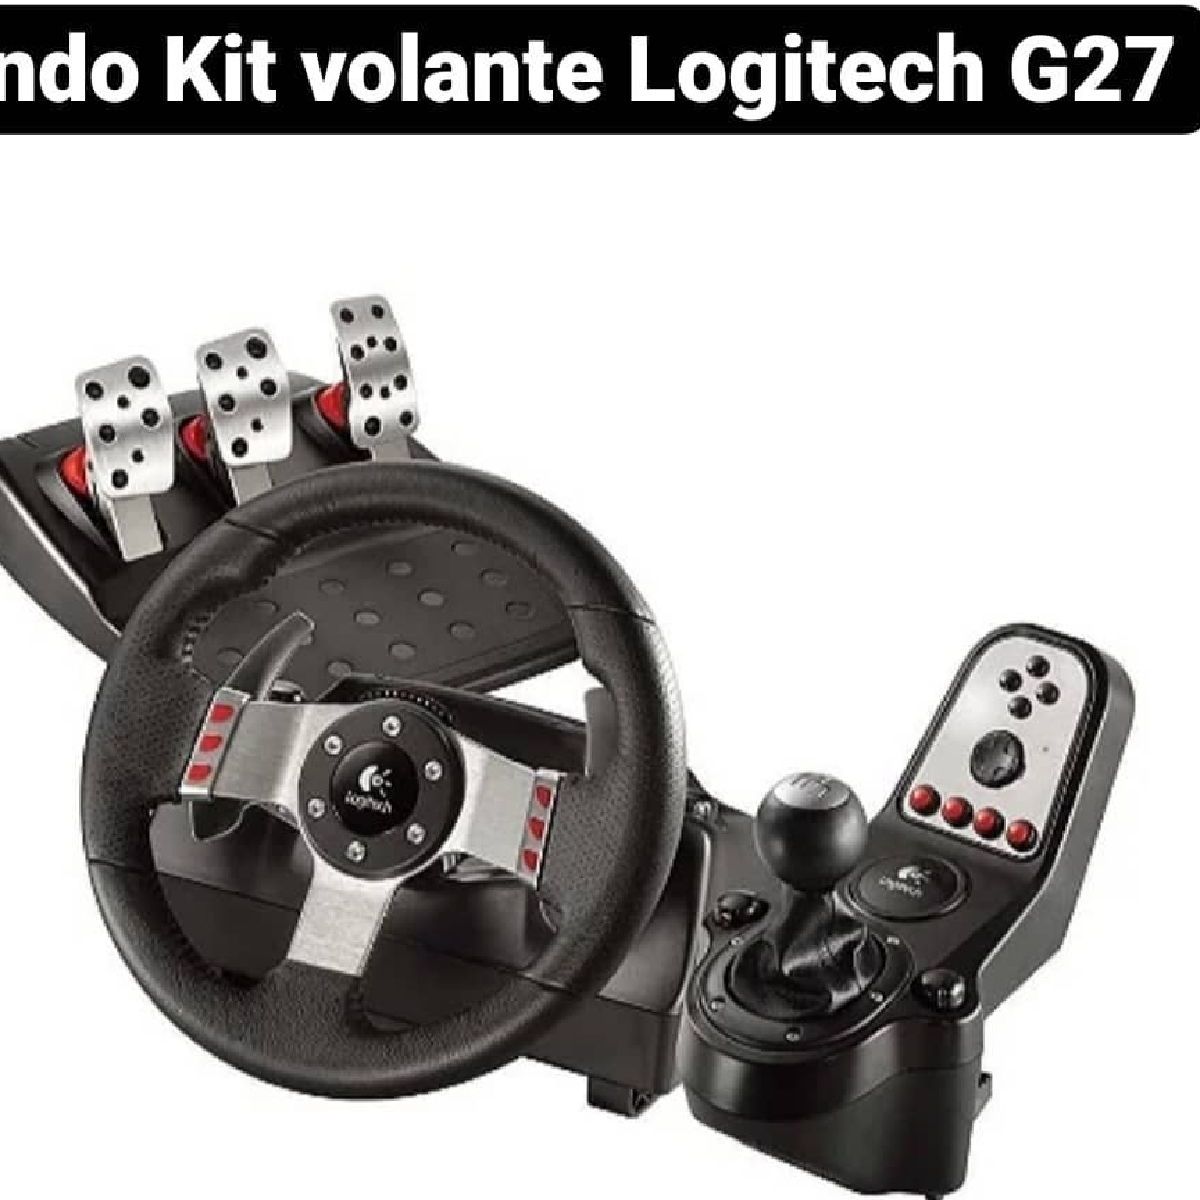 Kit Volante Logitech G27, Console de Videogame Logitech Usado 79438084